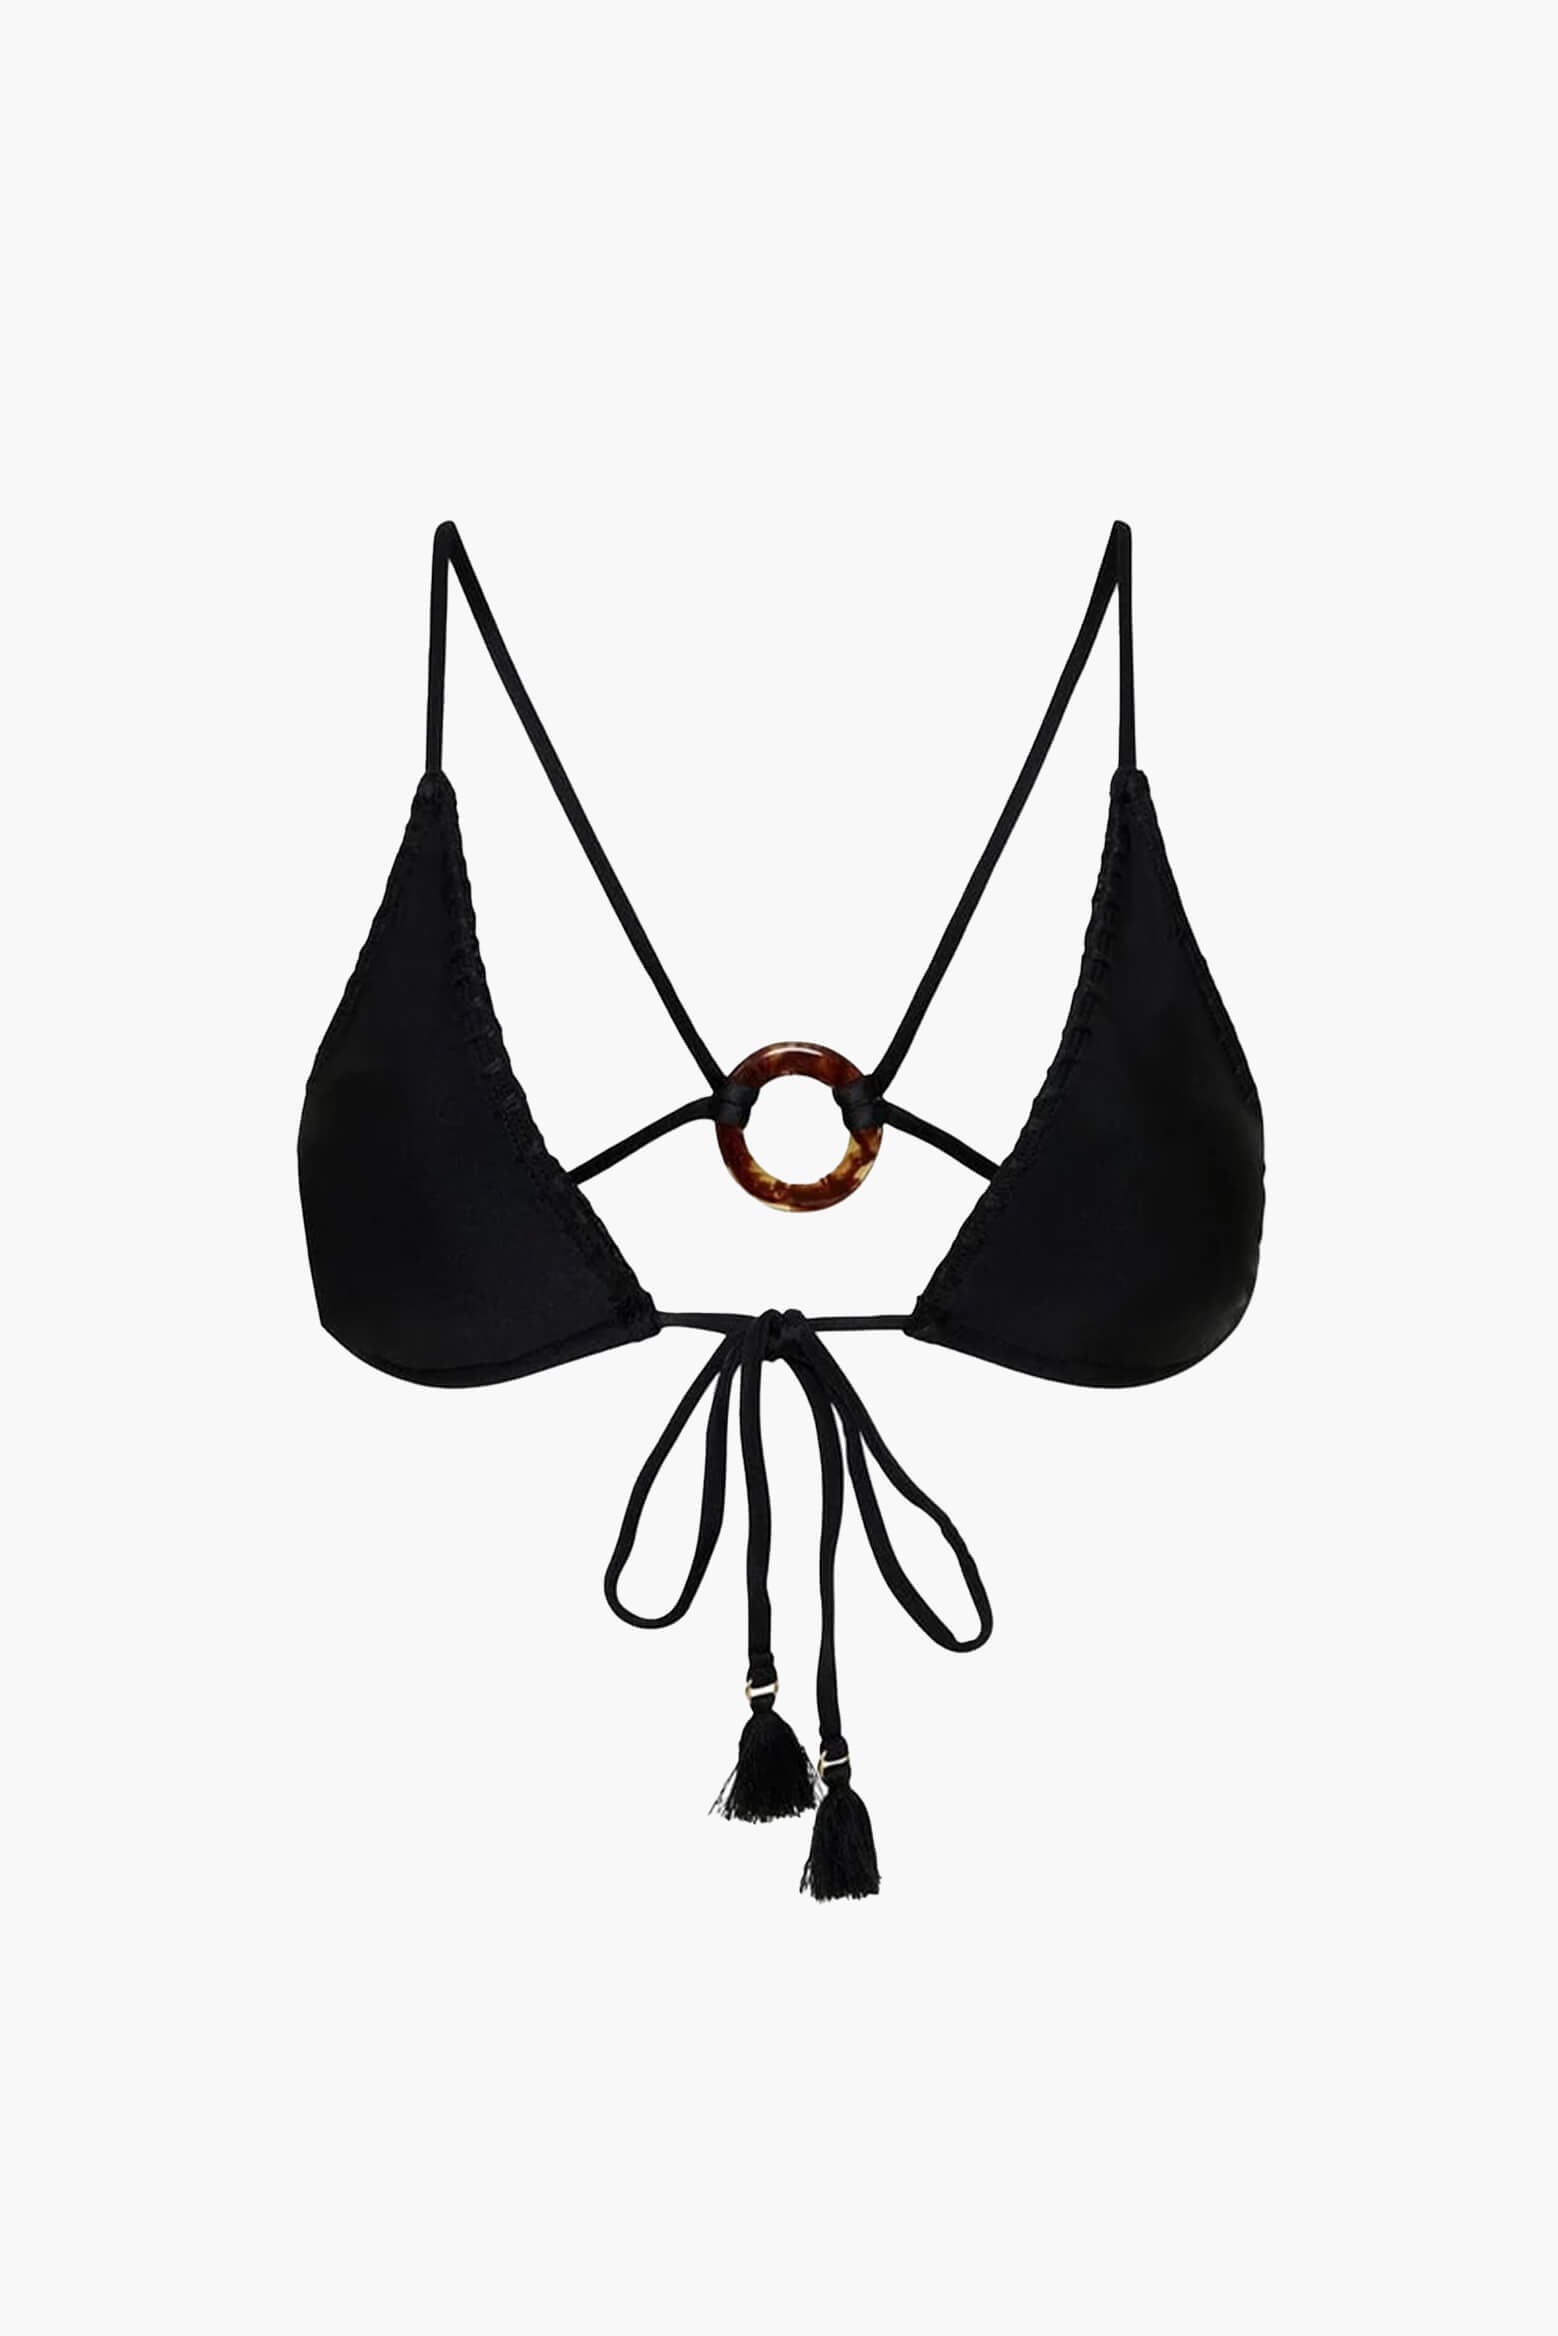 Faithful The Brand Alani Bikini Top in Black available at The New Trend Australia.